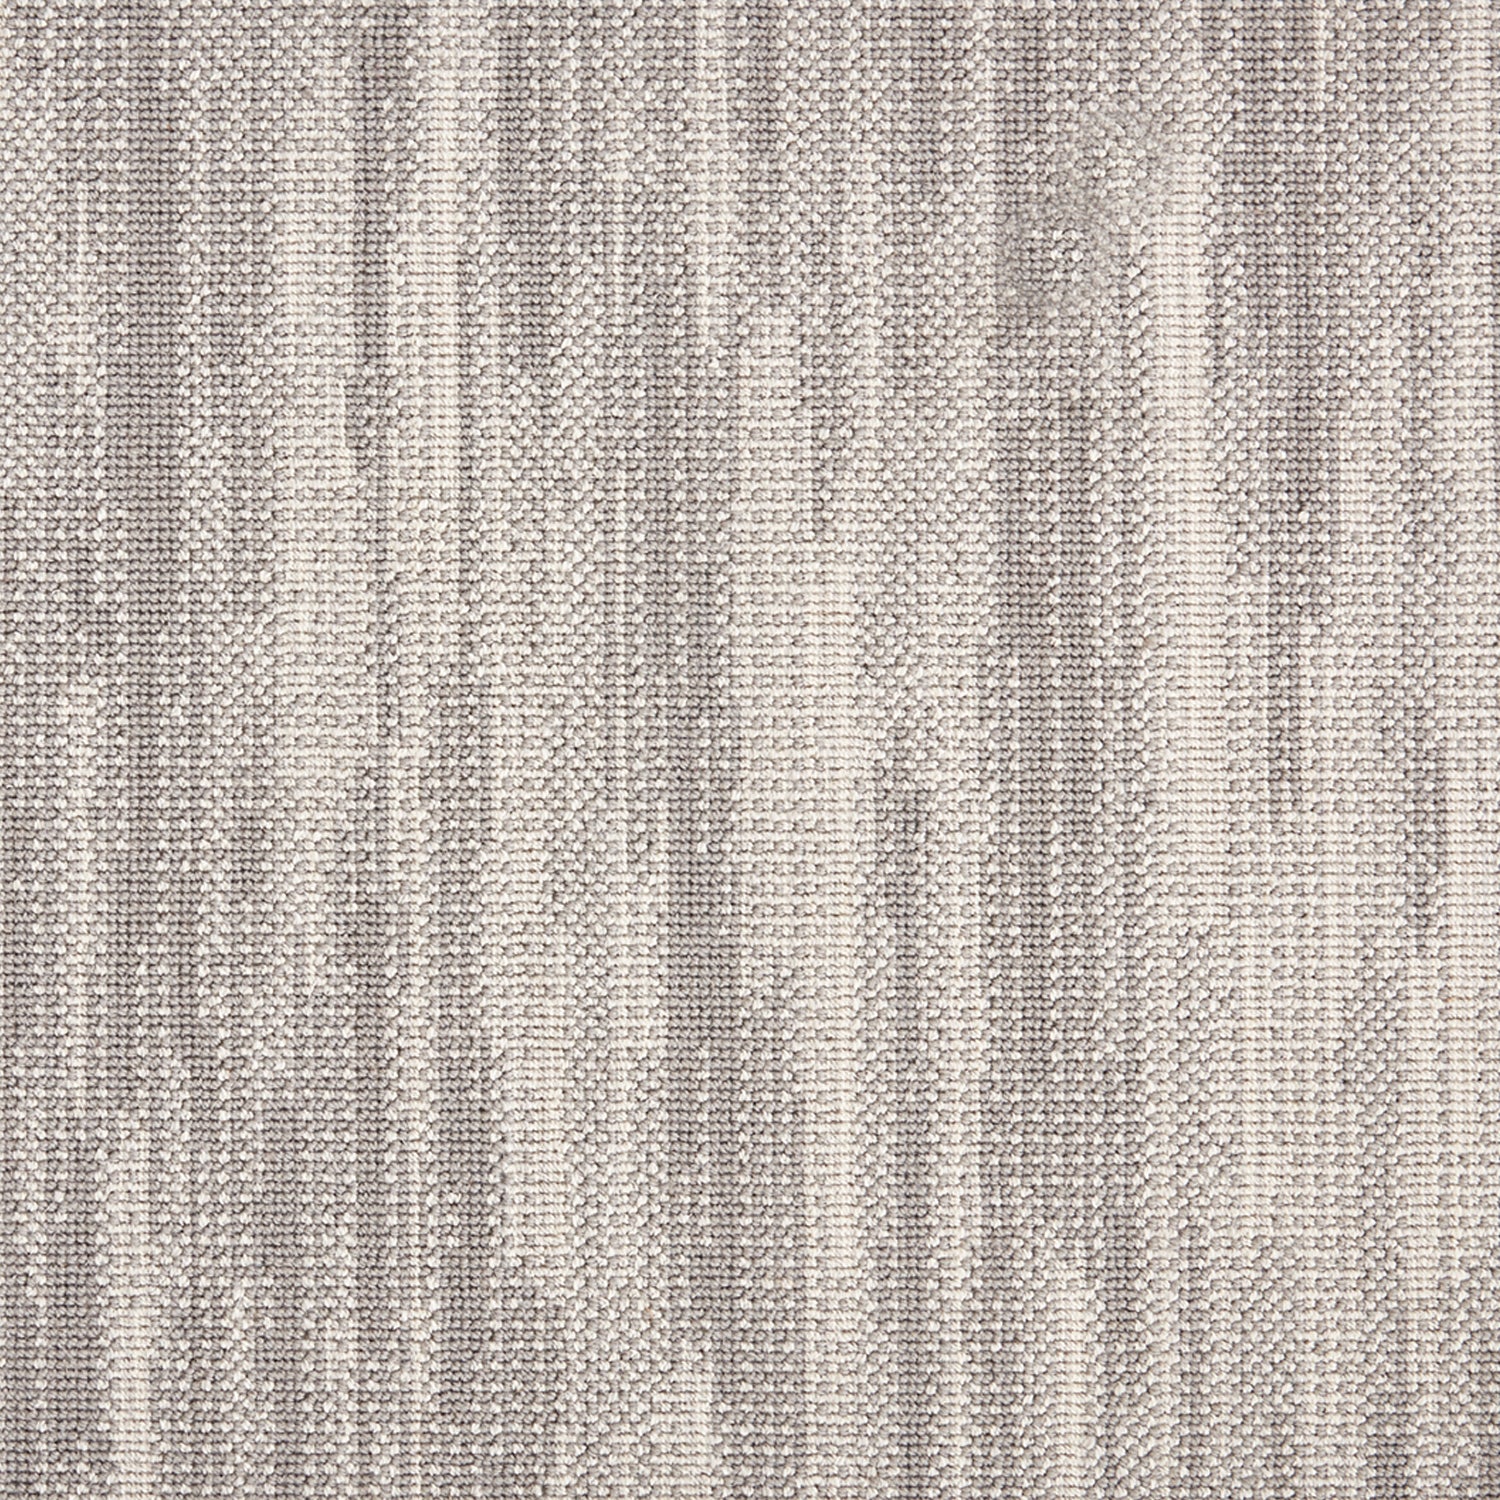 Wool-blend broadloom carpet swatch in a broken stripe pattern in cream, gray and sable.